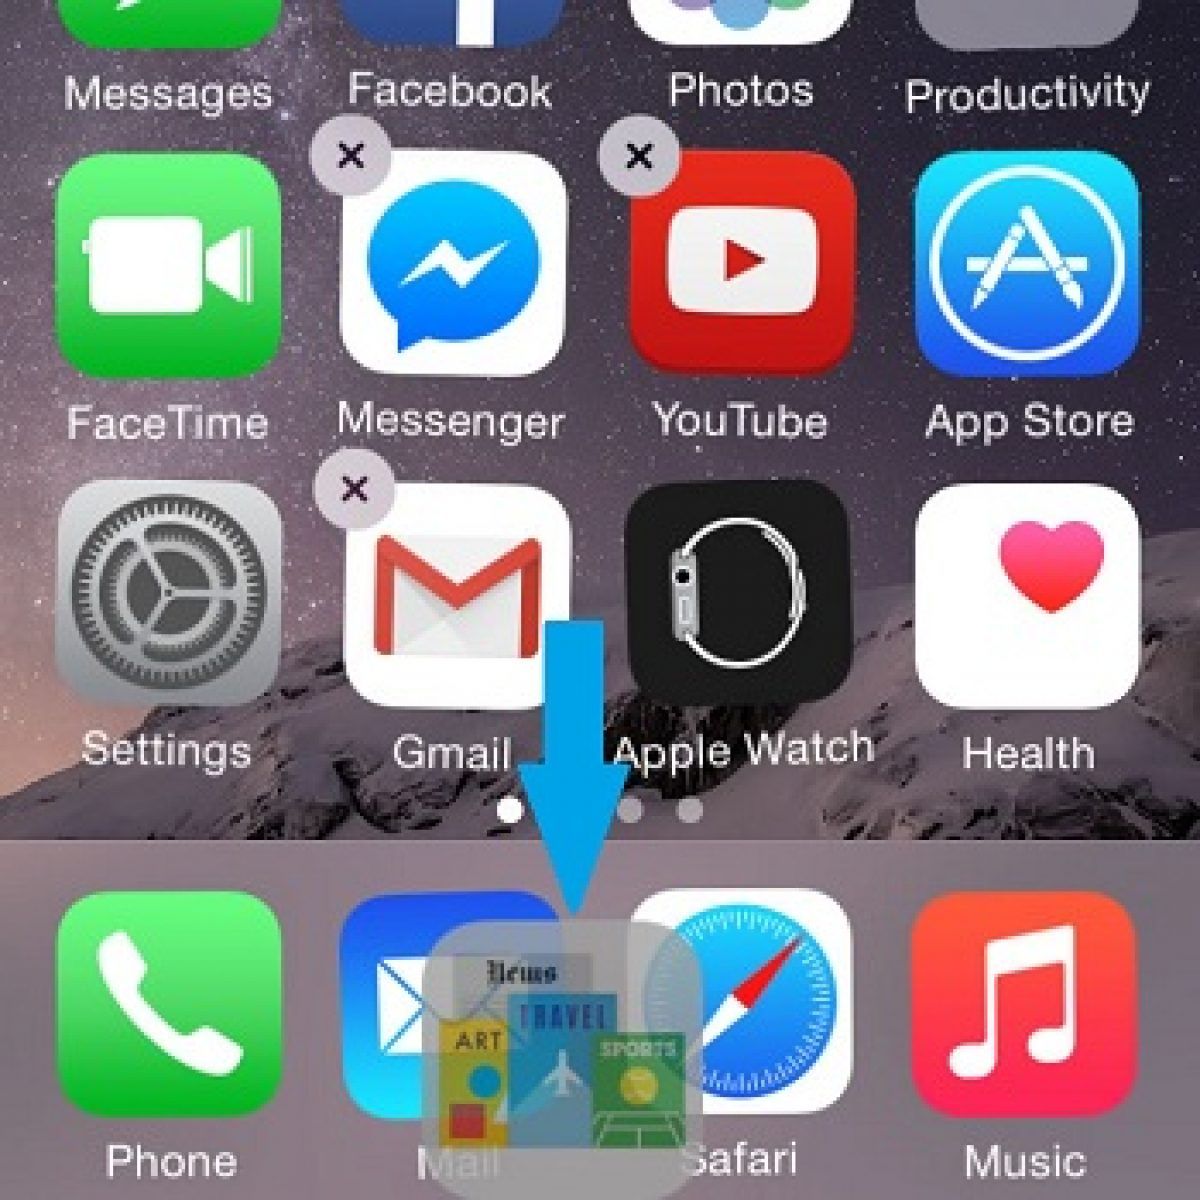 hidding-app-from-iPhone-home-screen-1200x1200.jpg